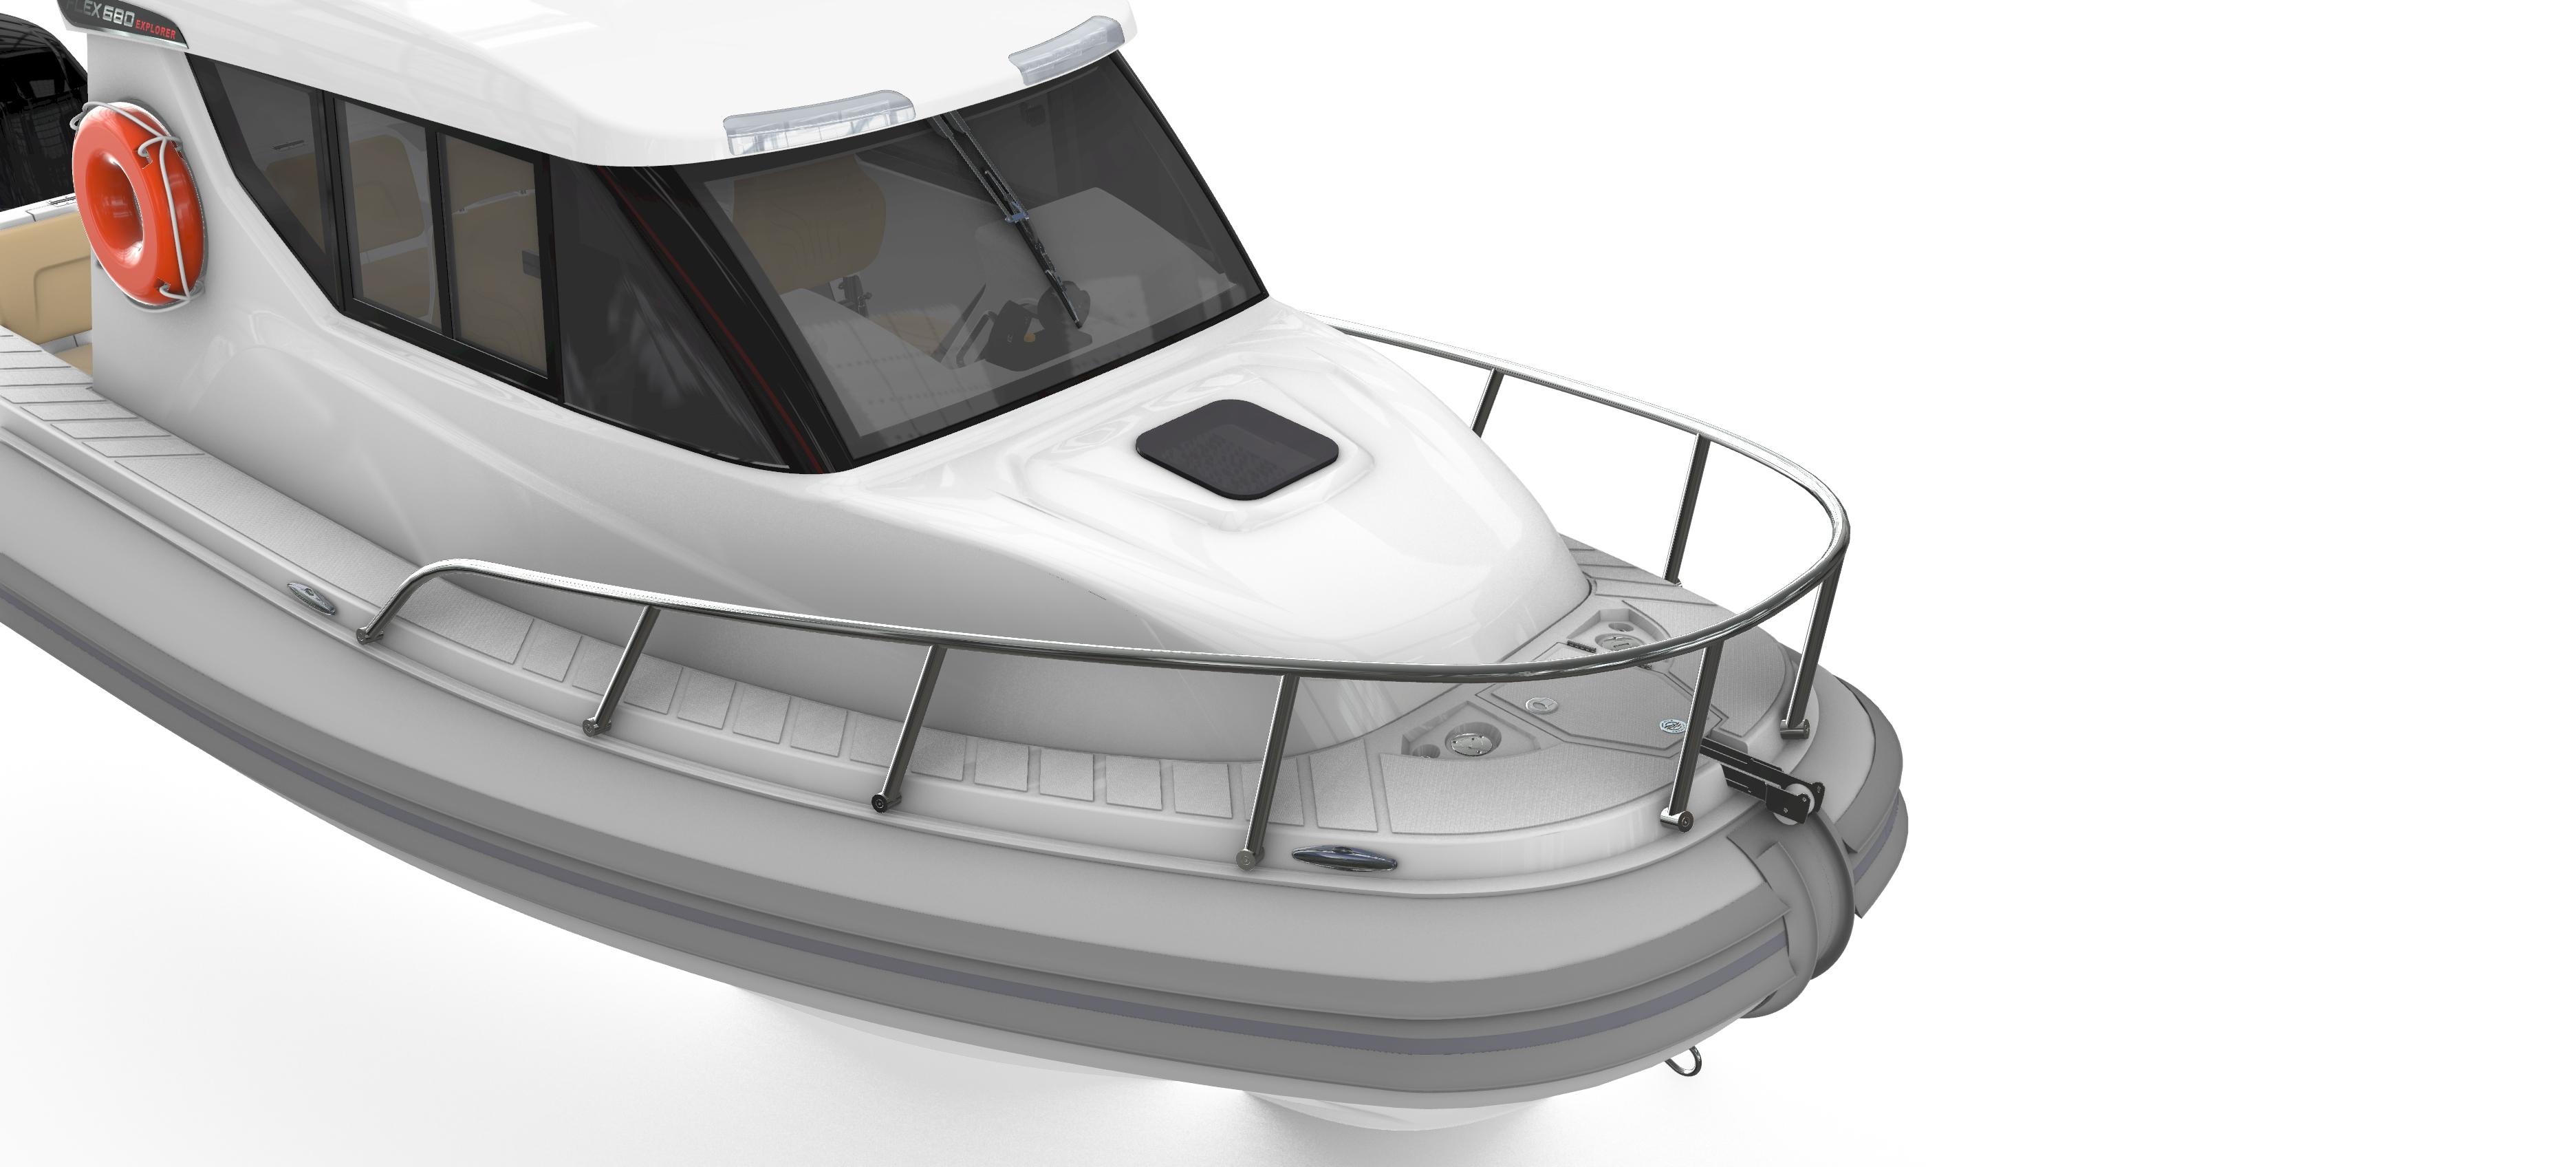 2023 Flexboat Flex 680 Explorer Rigid Inflatable Boats (RIB) for sale -  YachtWorld